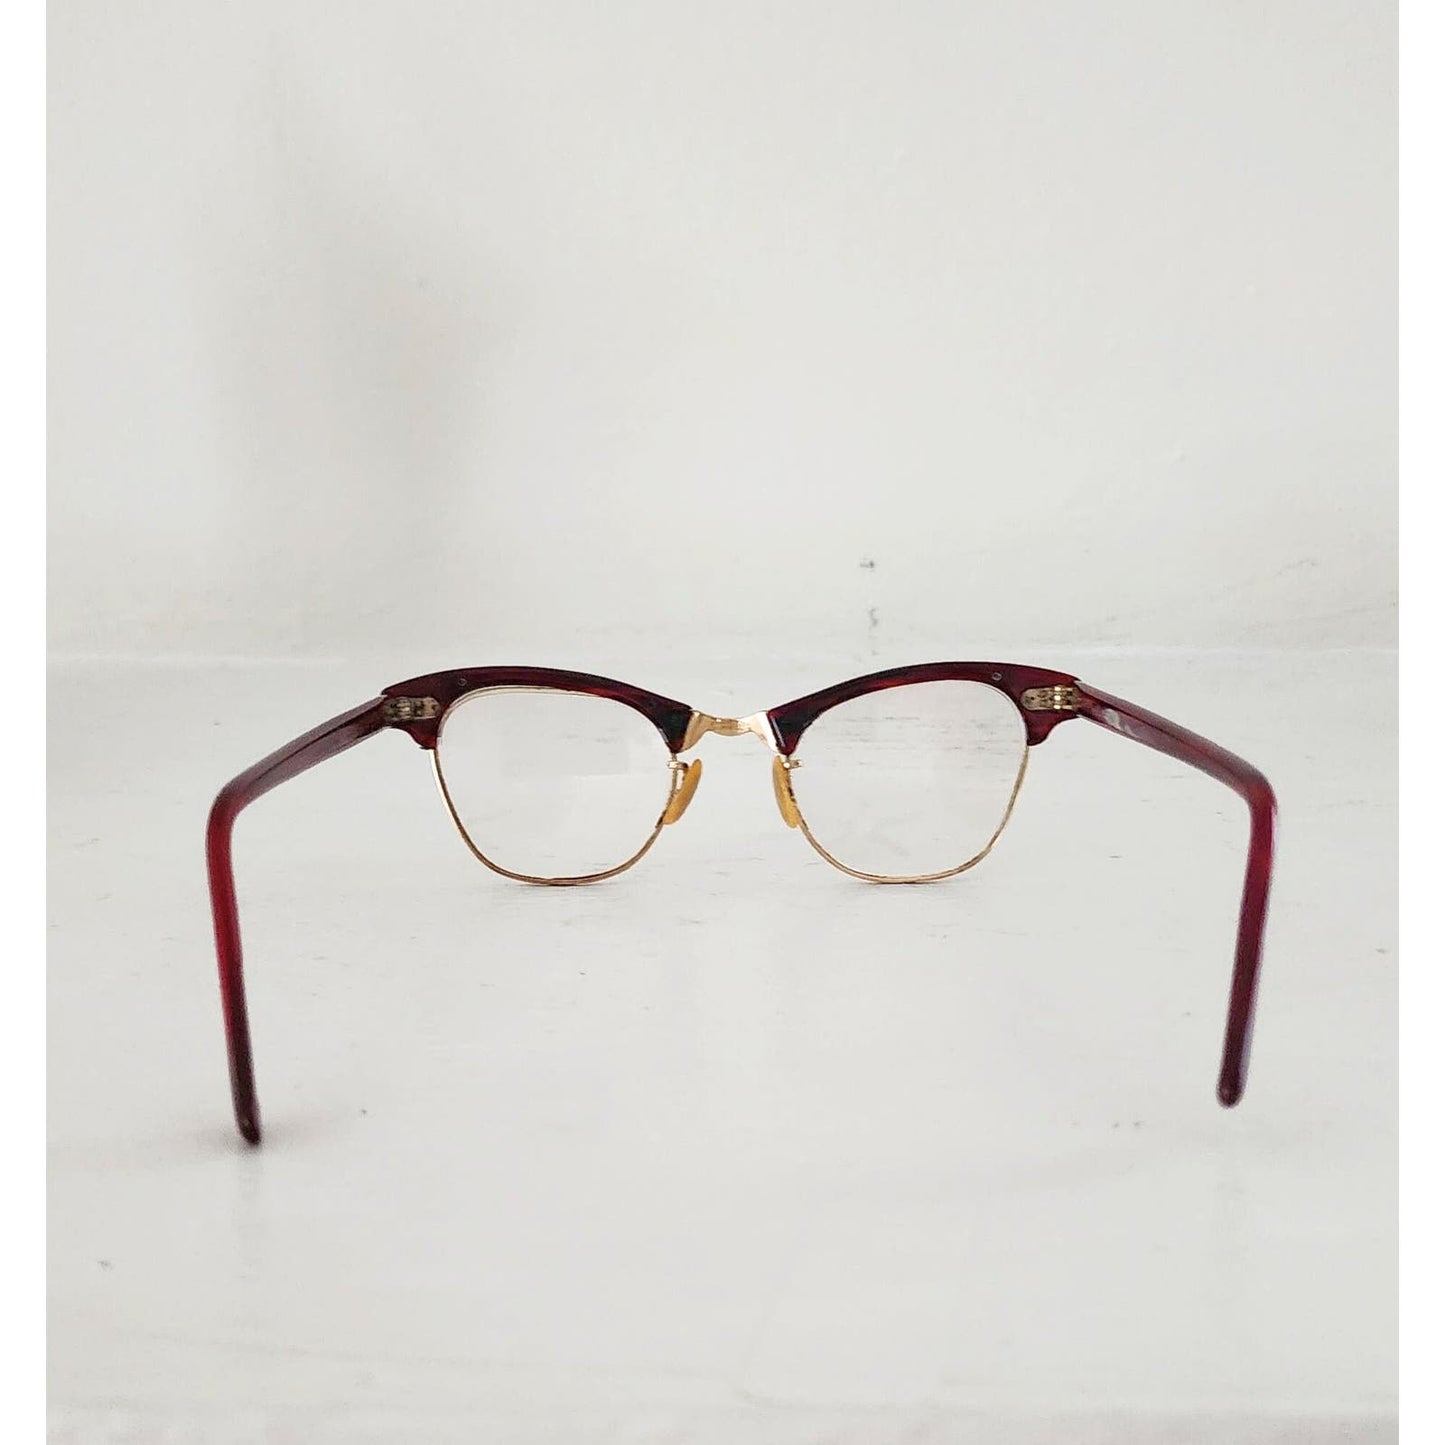 Vintage 50s Eye Glasses Dark Red & Gold by Art Craft